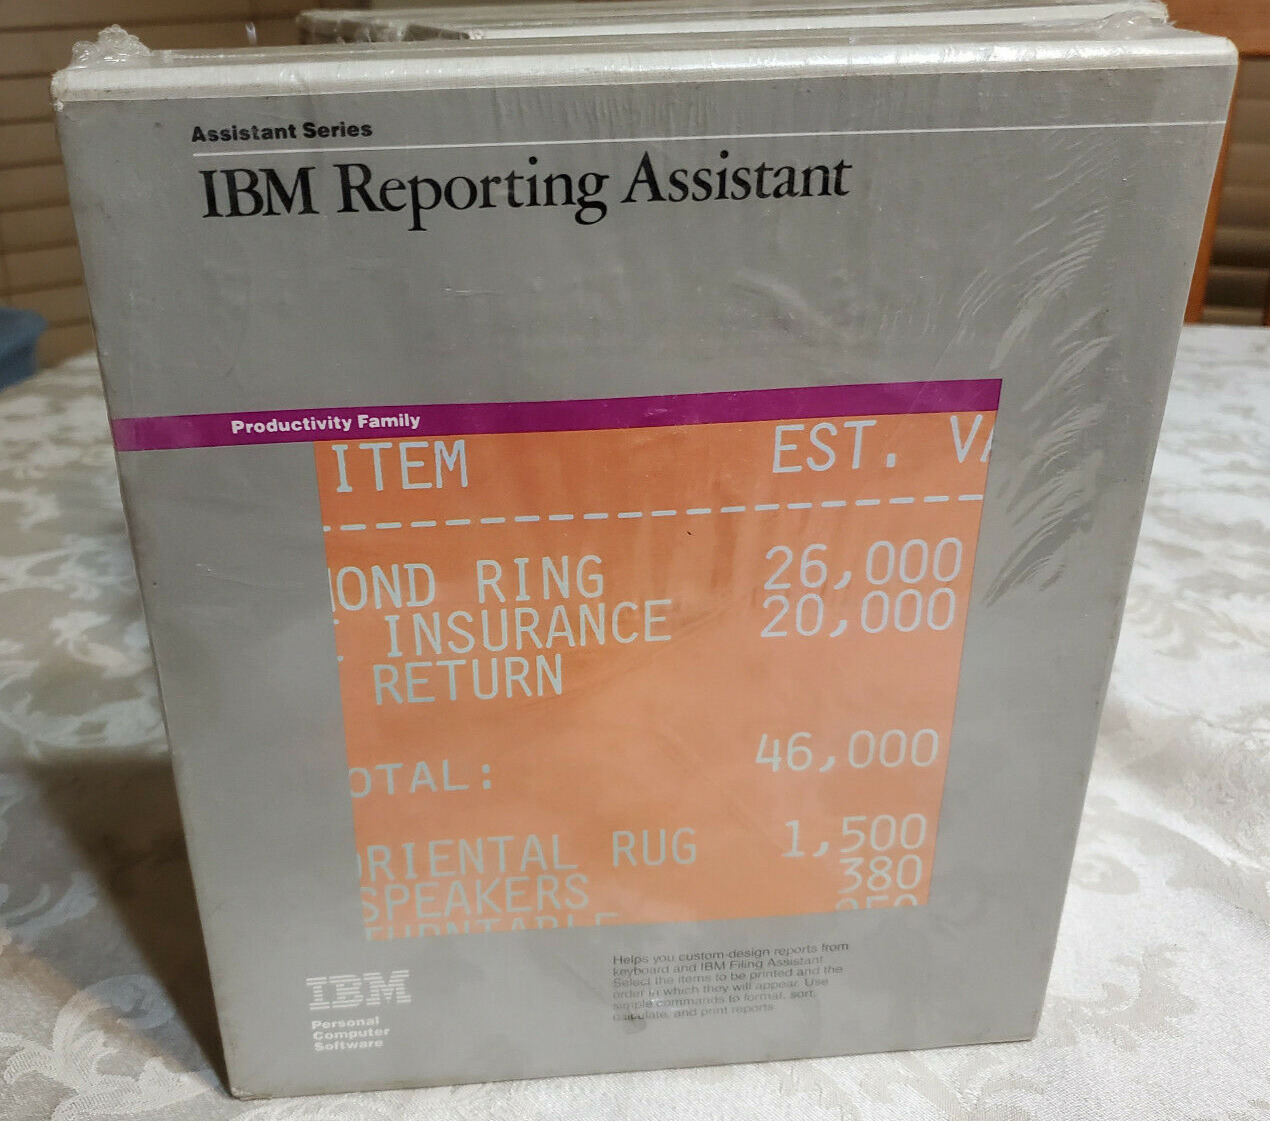 IBM Reporting Assistant - Sealed in Original Shrinkwrap